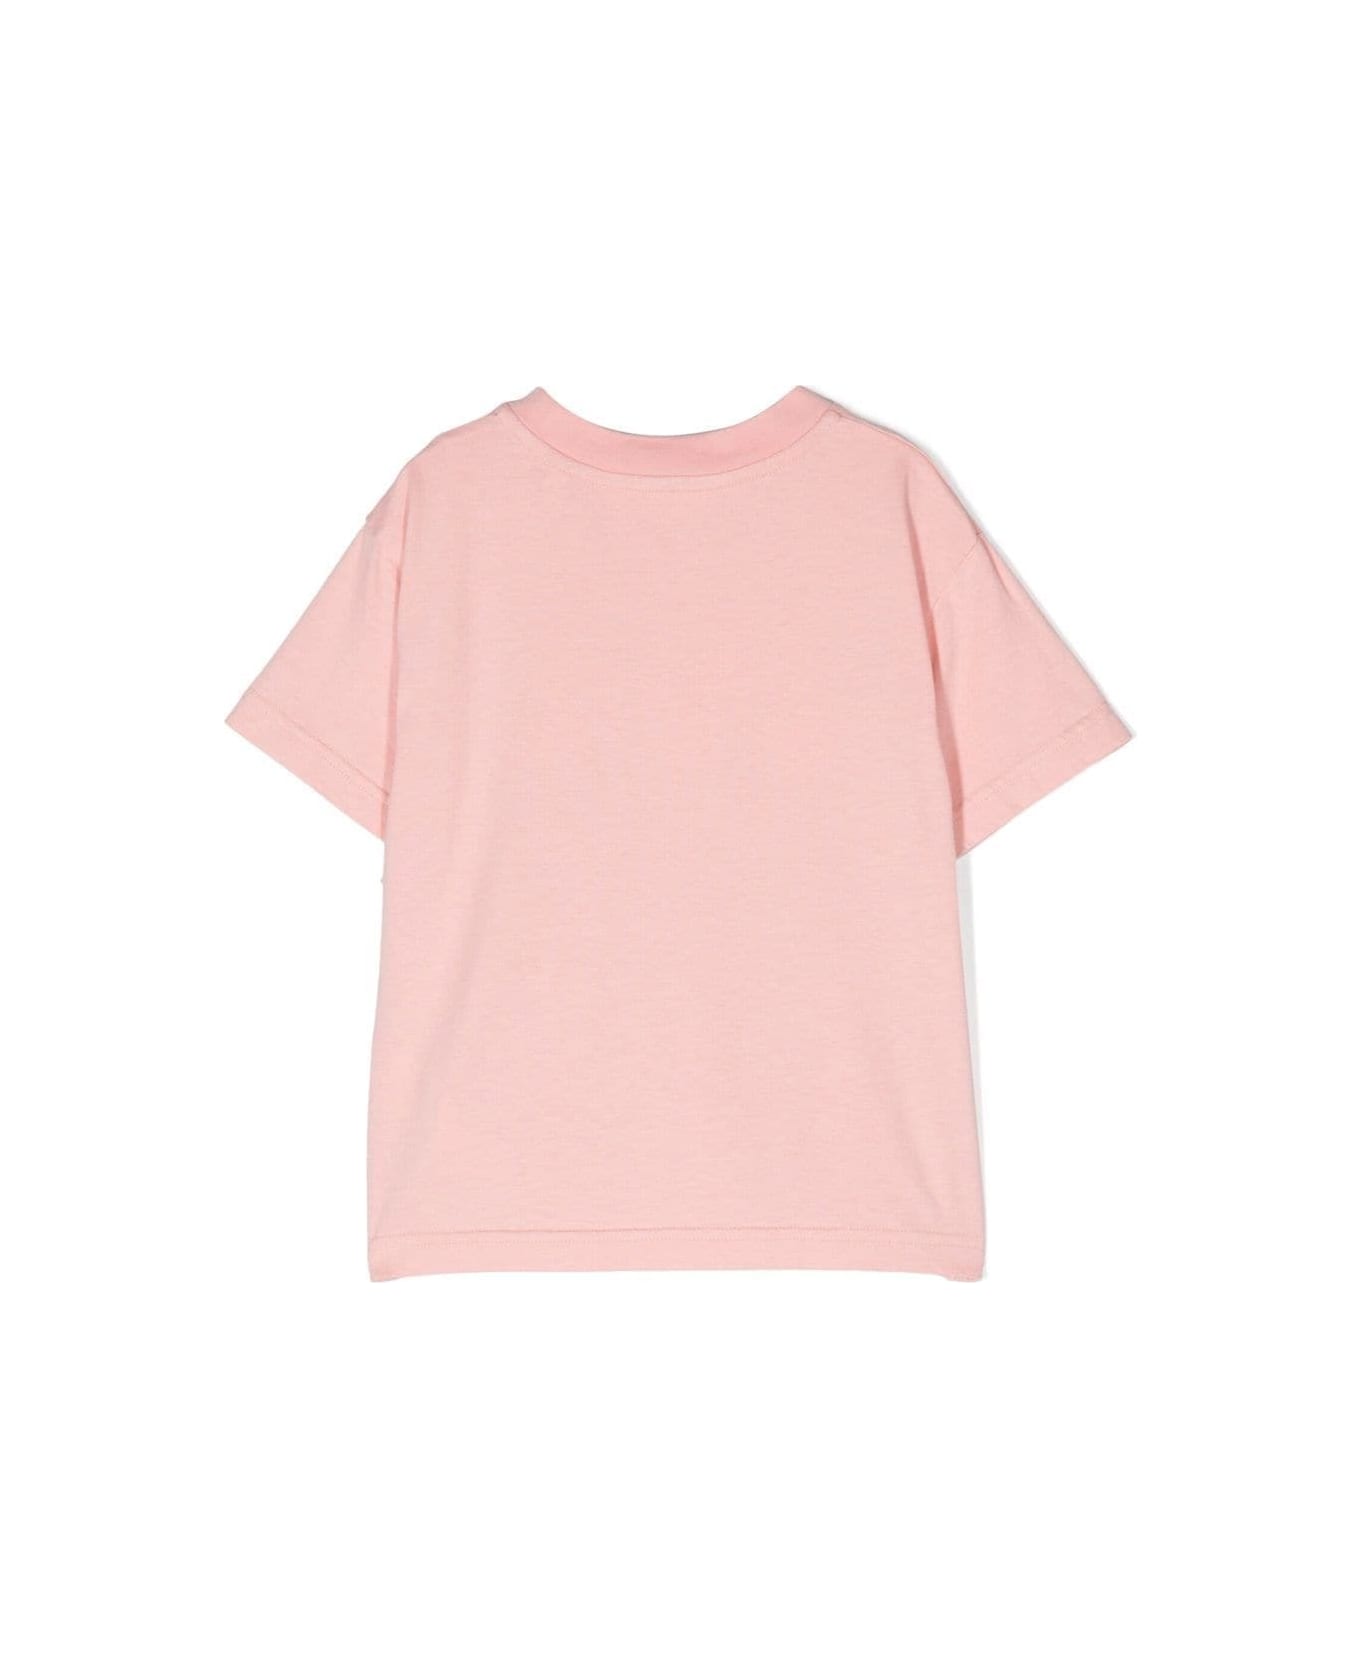 Palm Angels Pink Bear T-shirt - Pink Tシャツ＆ポロシャツ